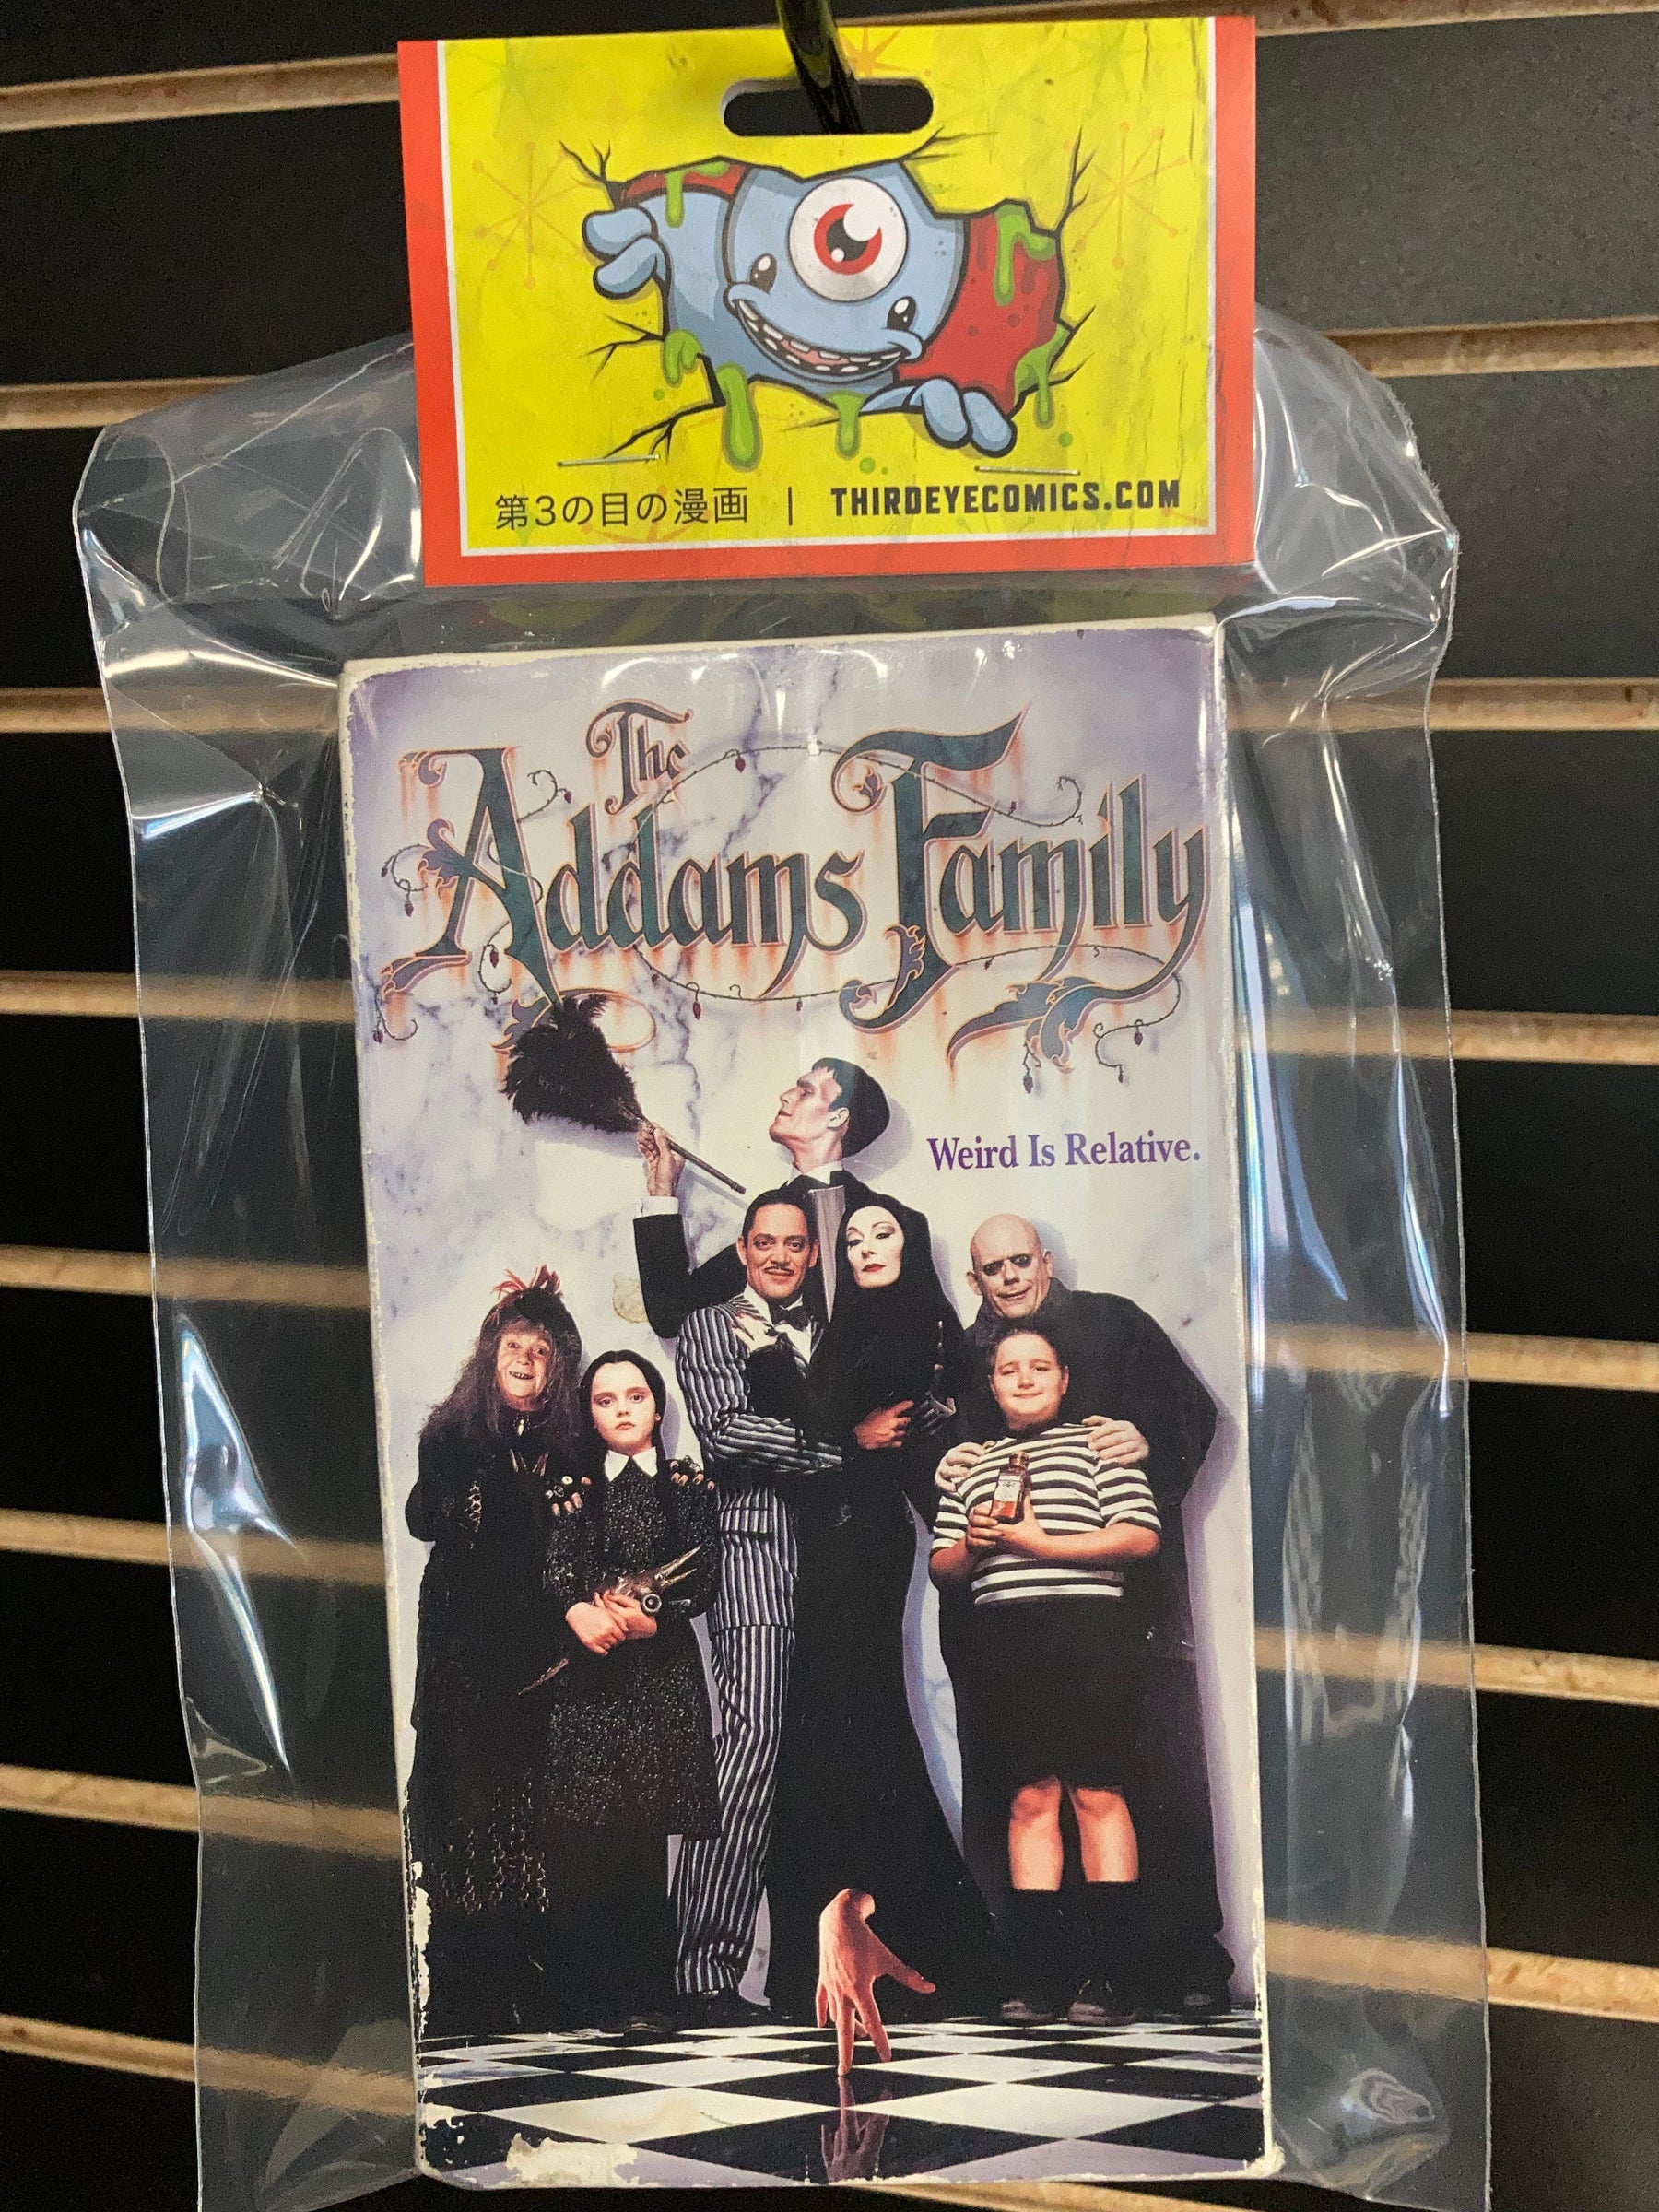 VHS: The Addams Family - Third Eye